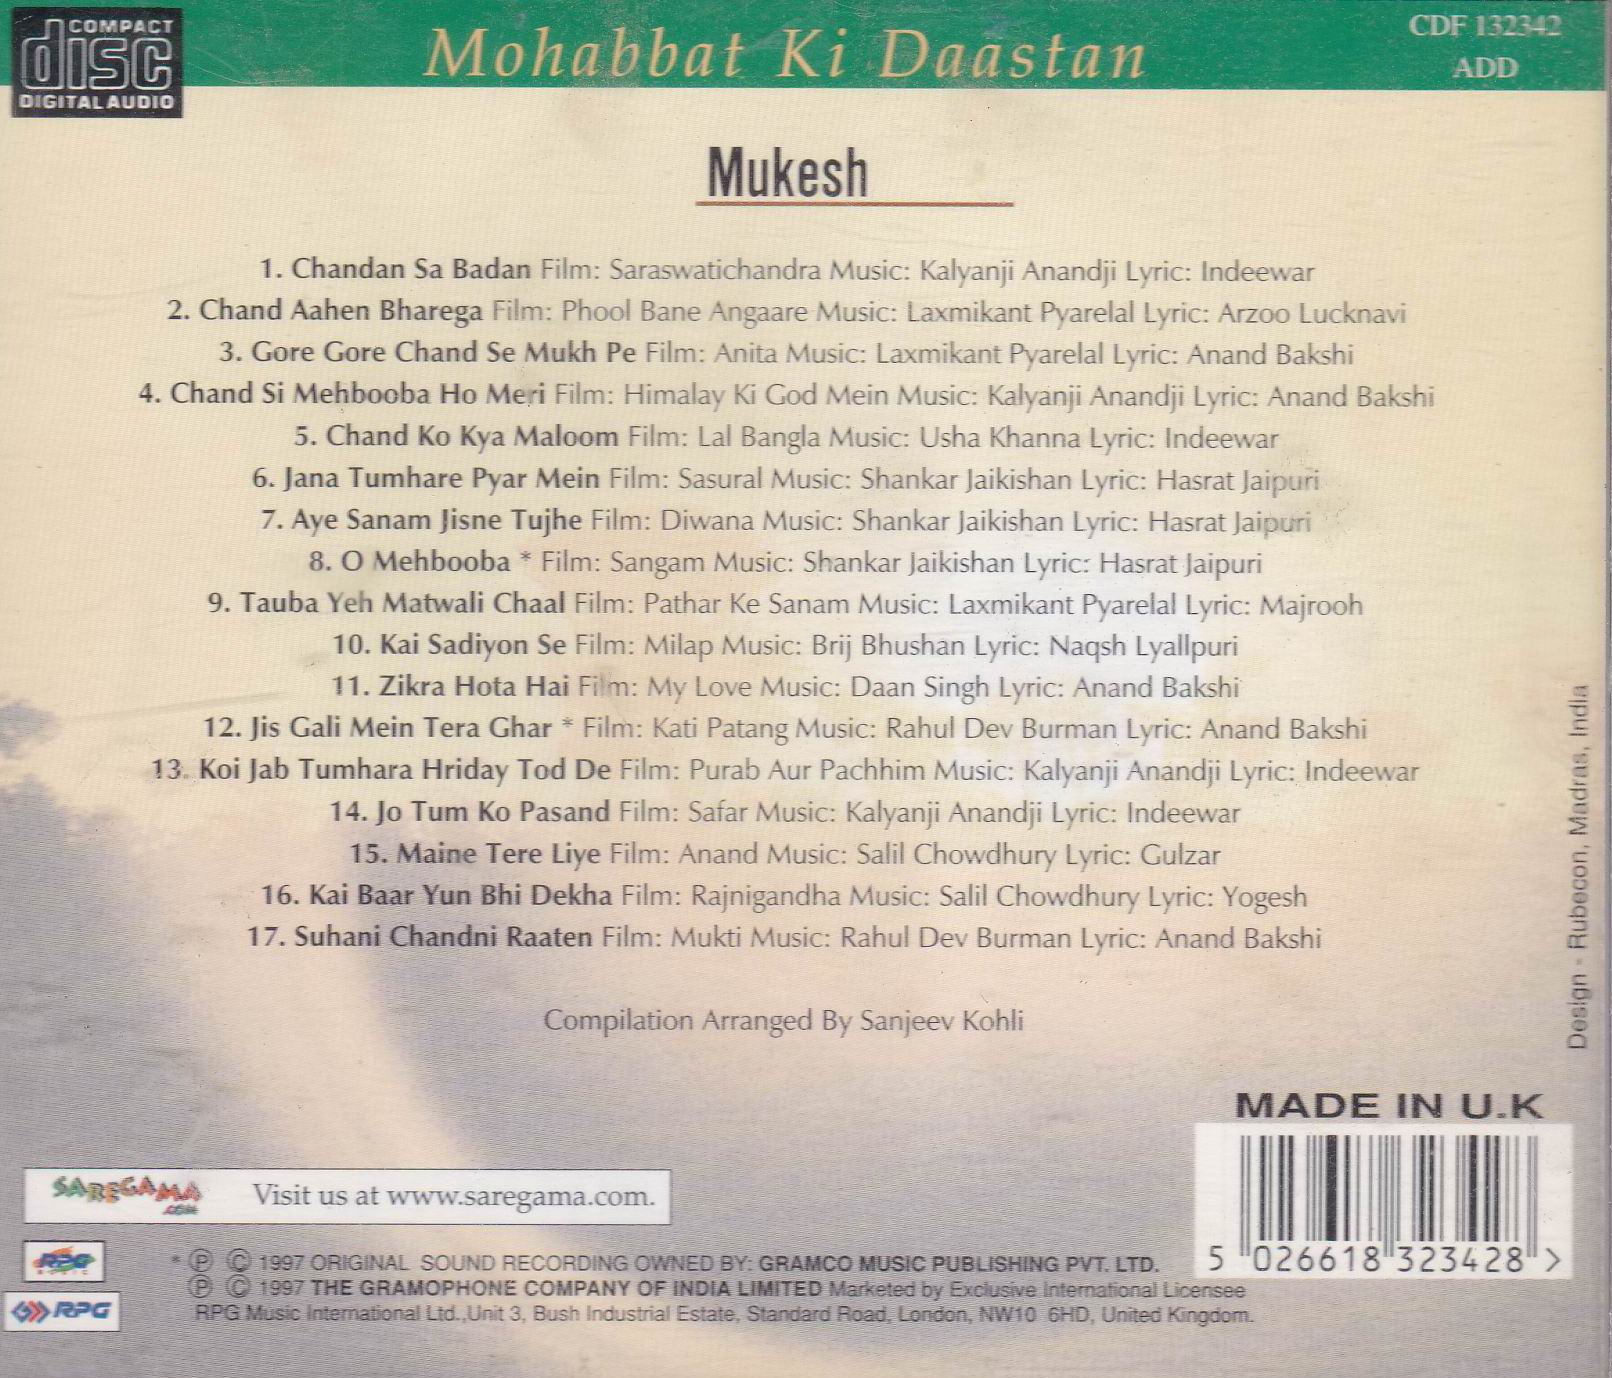 Mohabbat Ki Dastaan Mukesh EMI Cd - Click Image to Close